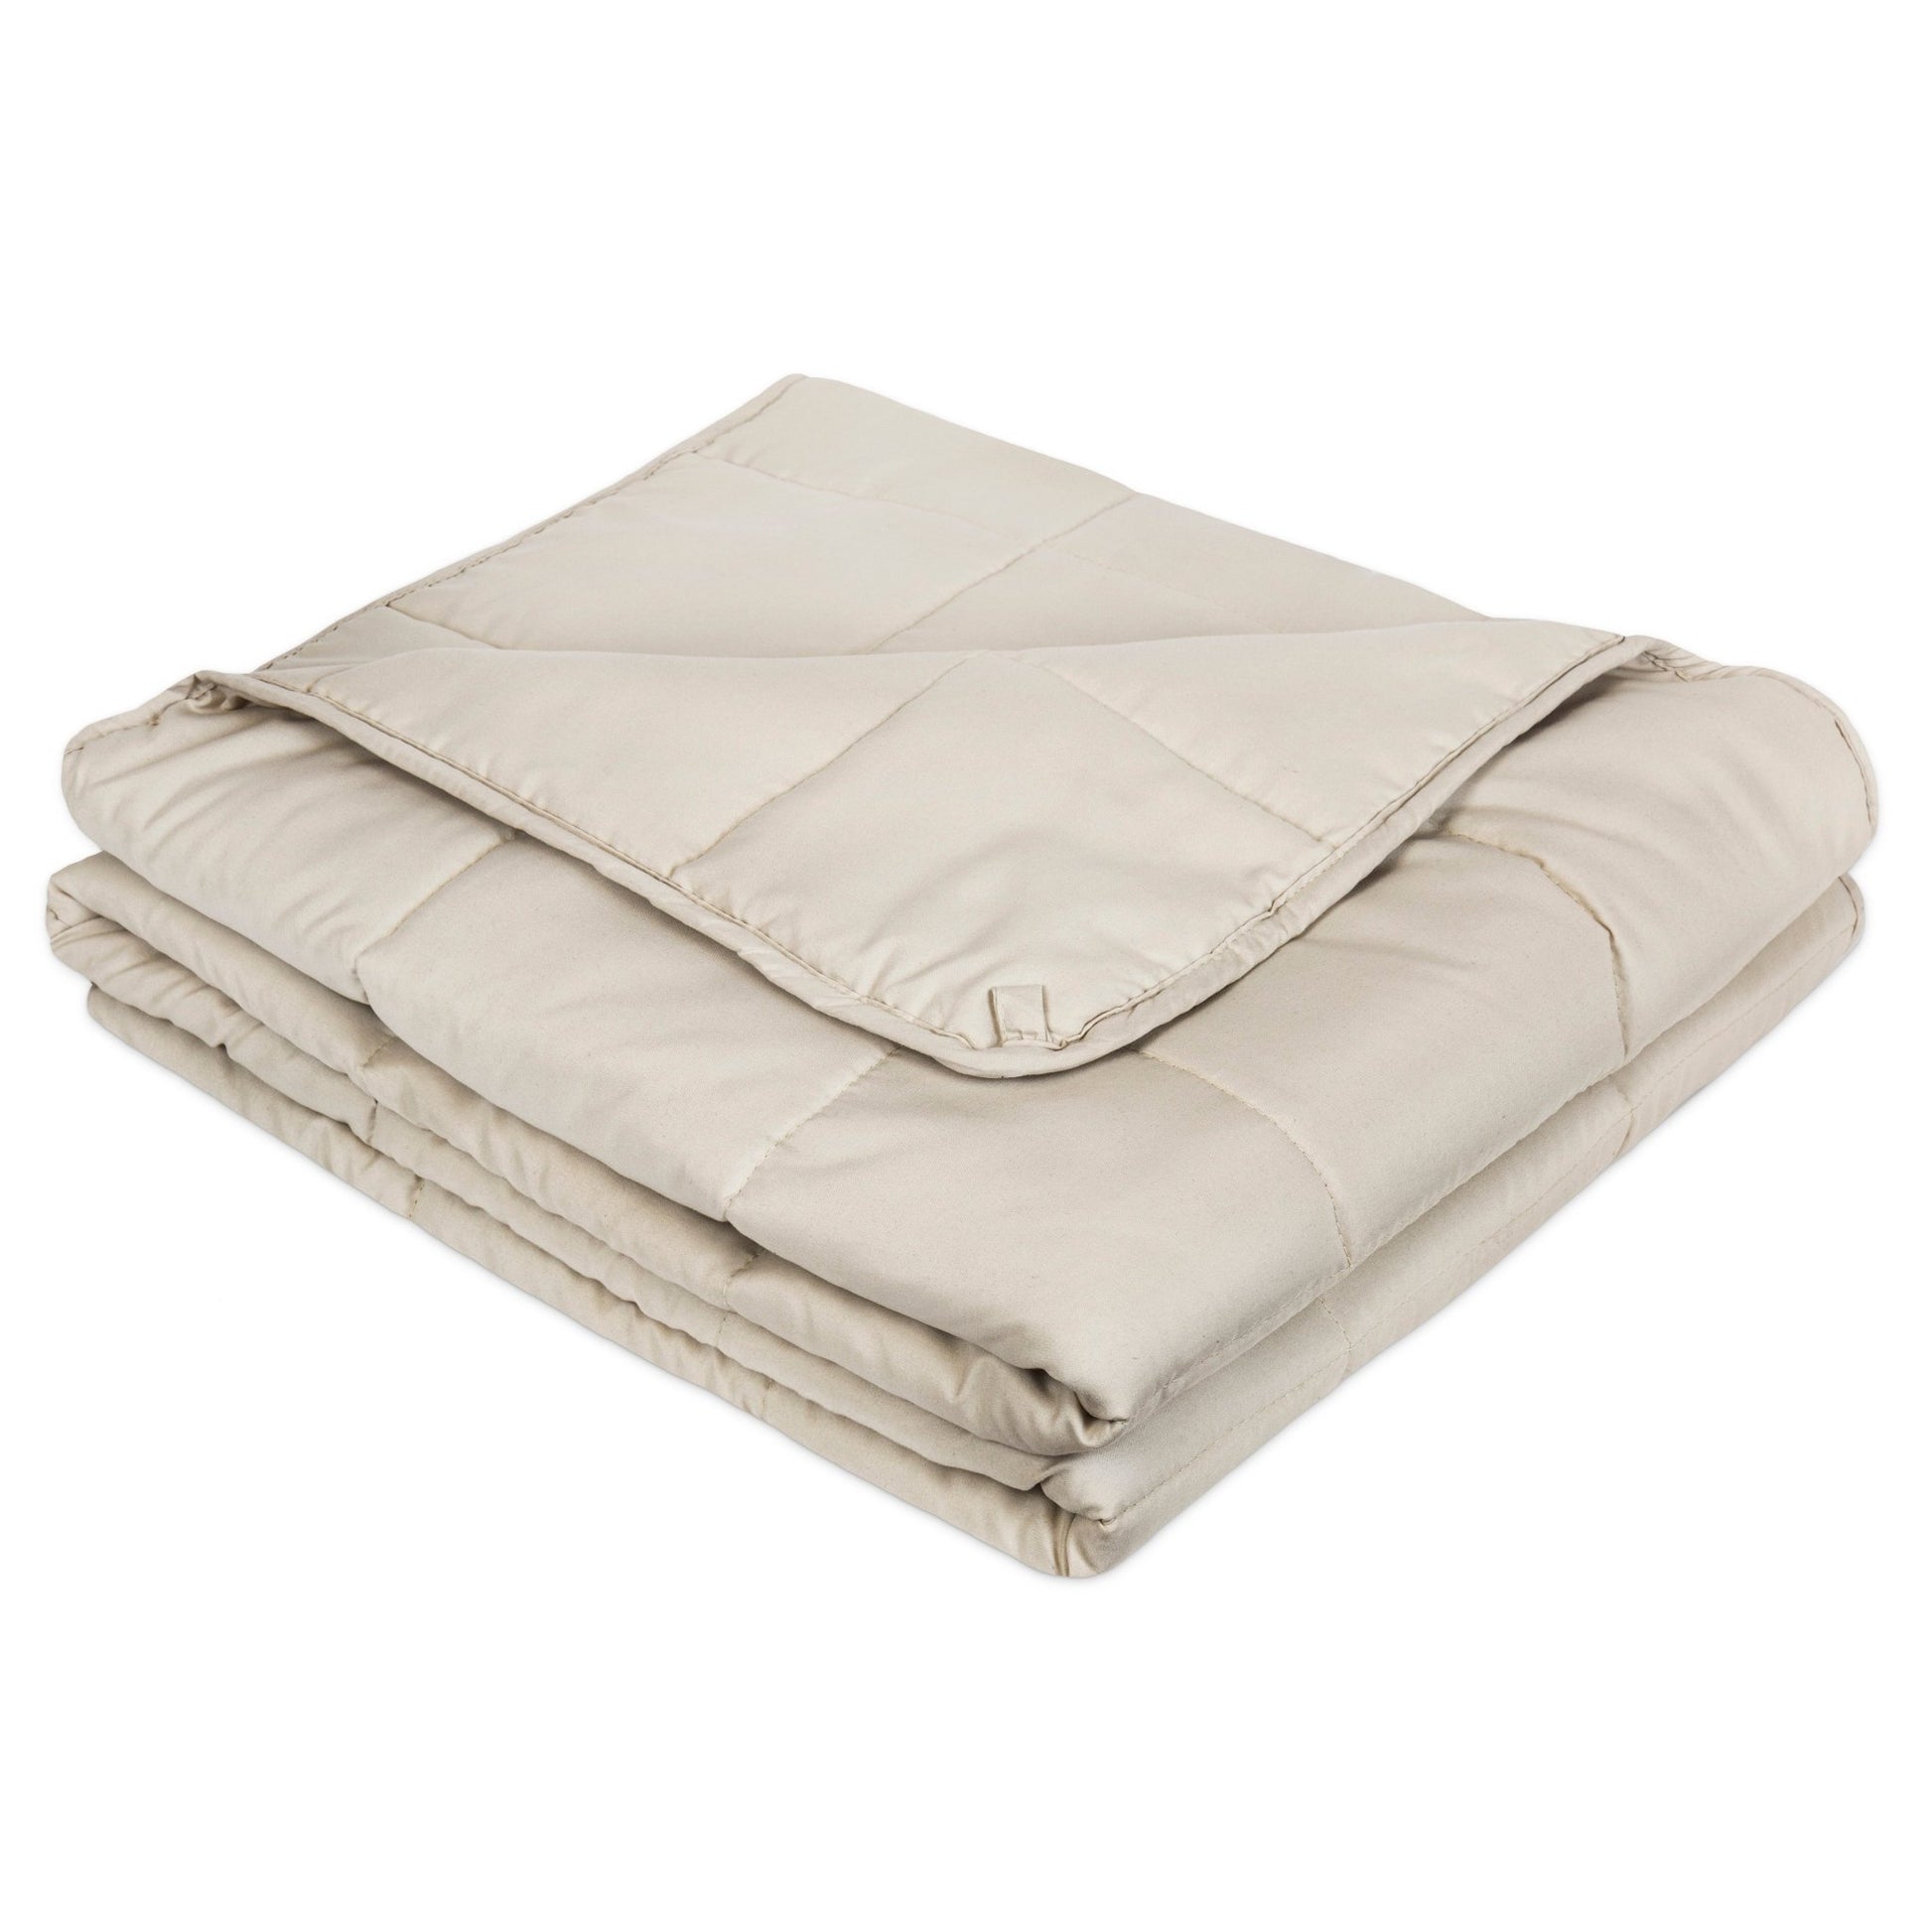 Super Soft Woven Weighted Blanket Throw Home Decor Bedding 48x72 Beige - DecoElegance - Blanket Throw Home Bedding